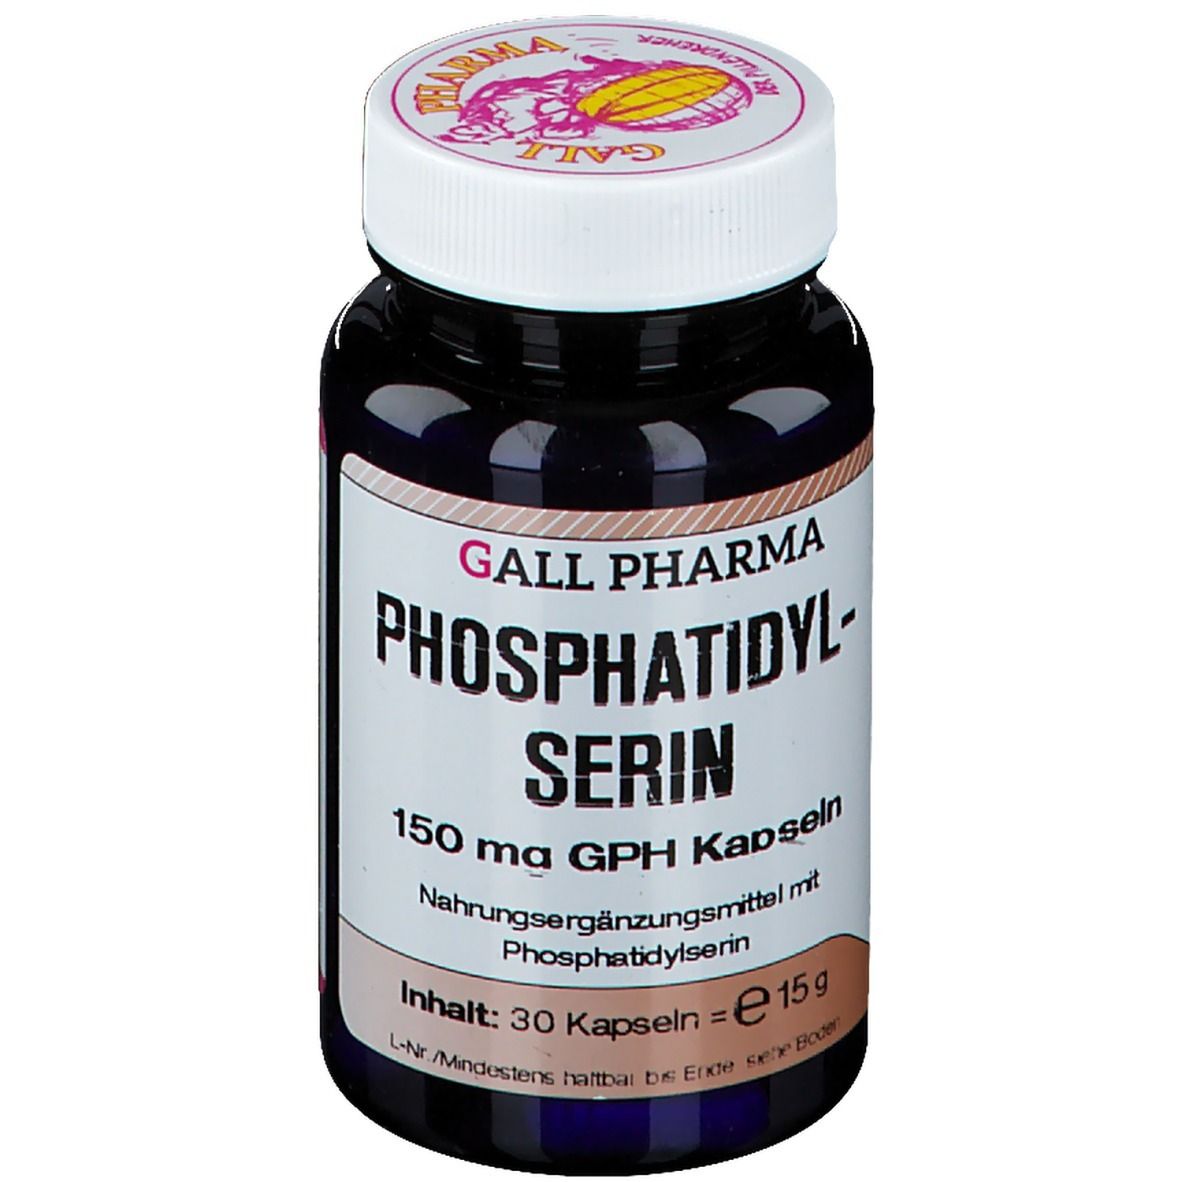 Gall Pharma Phosphatidylserin 150 mg GPH Kapseln